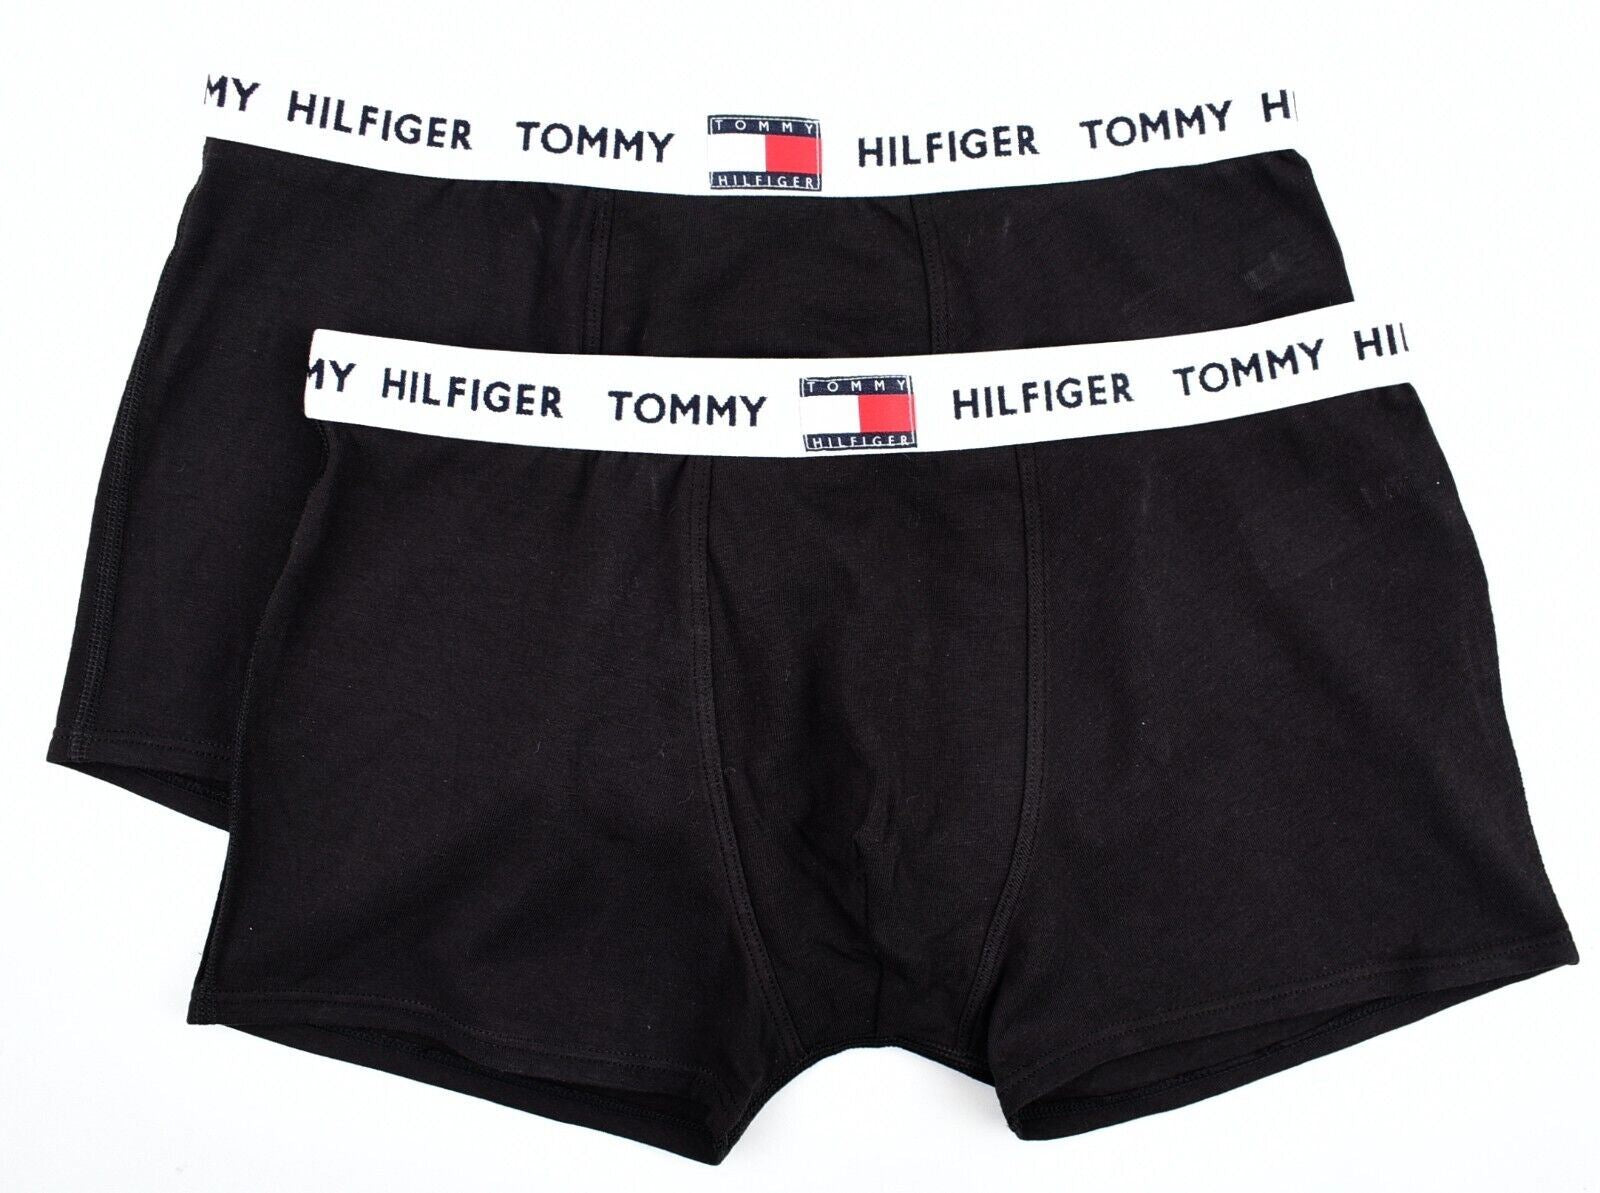 TOMMY HILFIGER - TOMMY 85 - Boys' 2-pk Boxer Trunks, Black, size 12-14 years